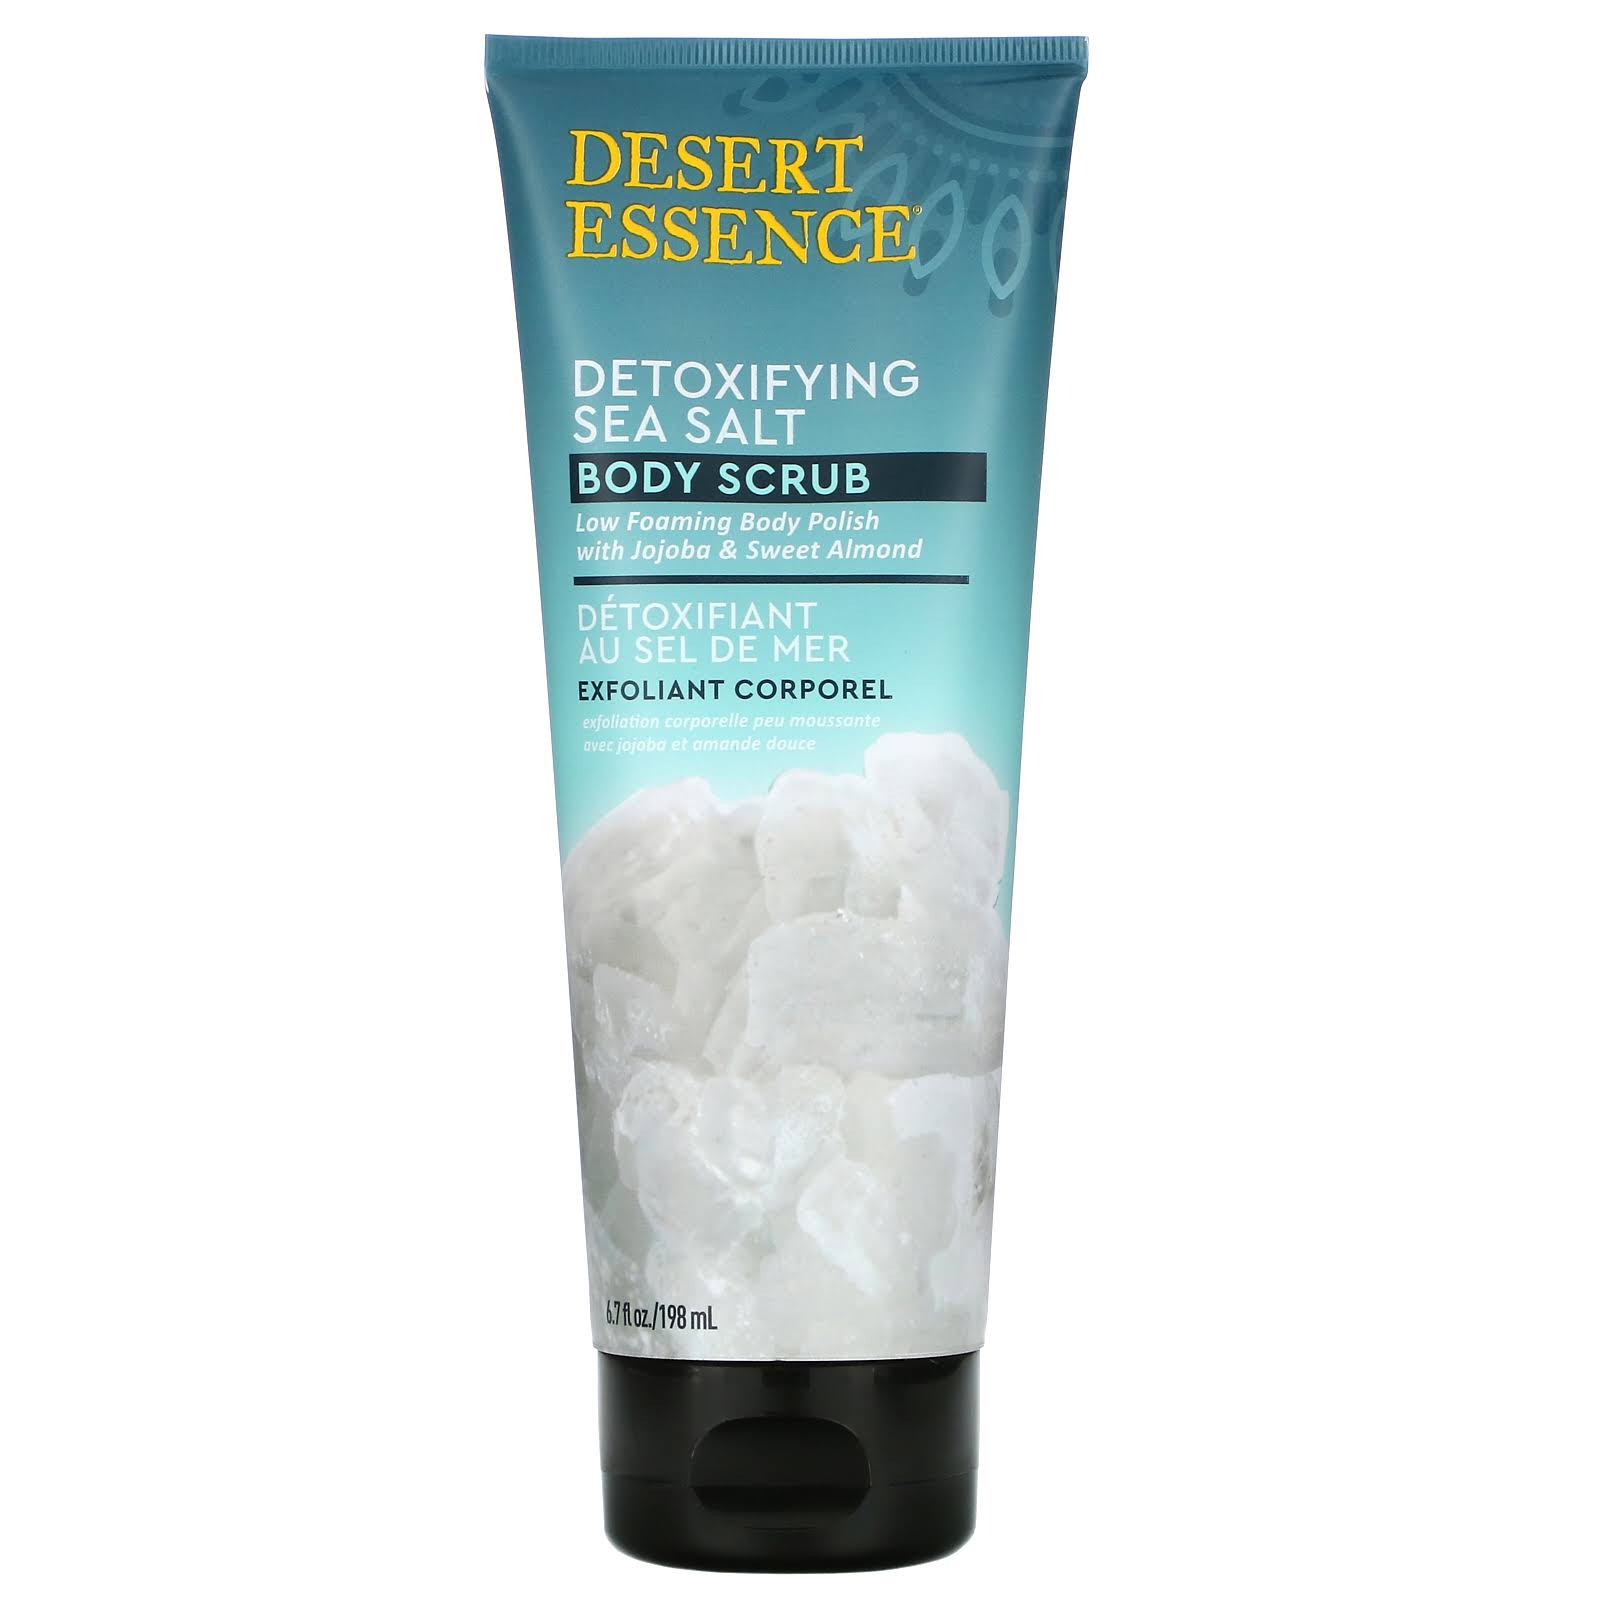 Desert Essence Body Scrub Detoxifying Sea Salt 6.7 fl oz